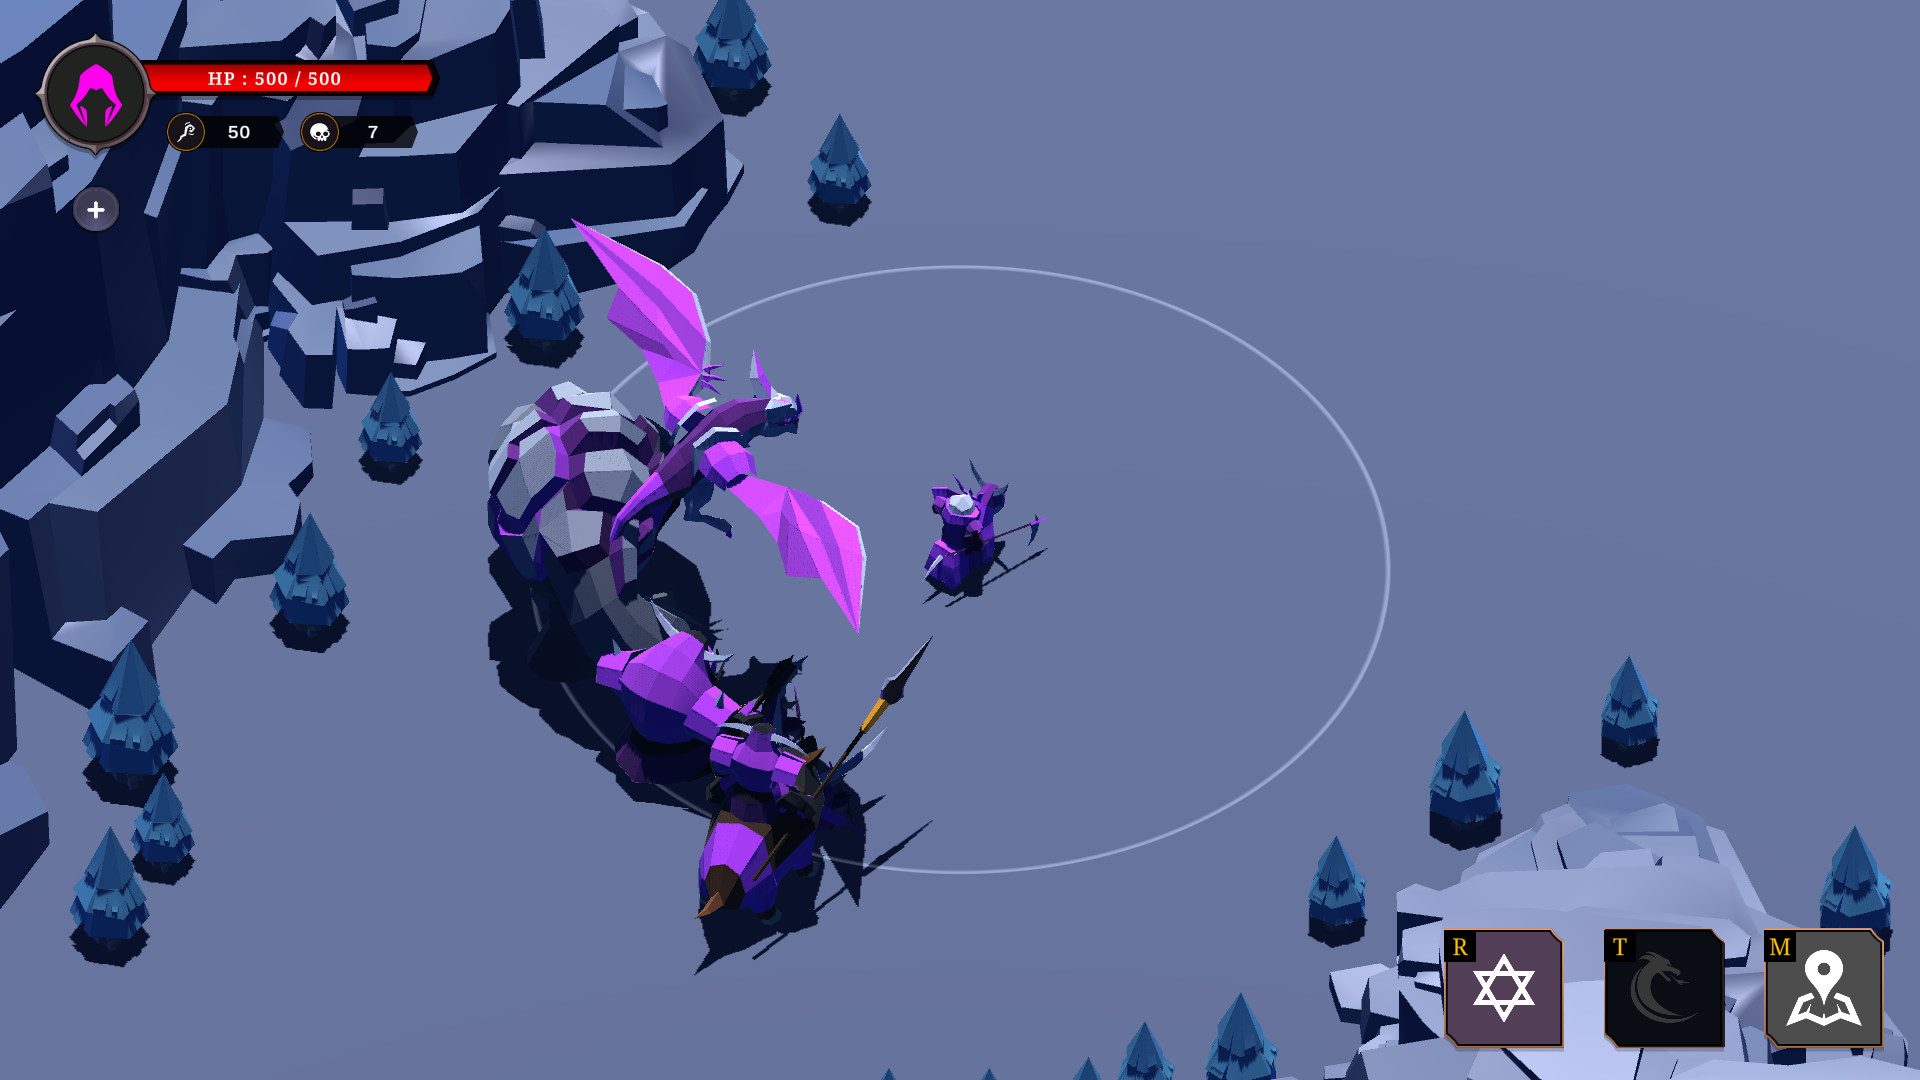 Necromancer : Winter screenshot